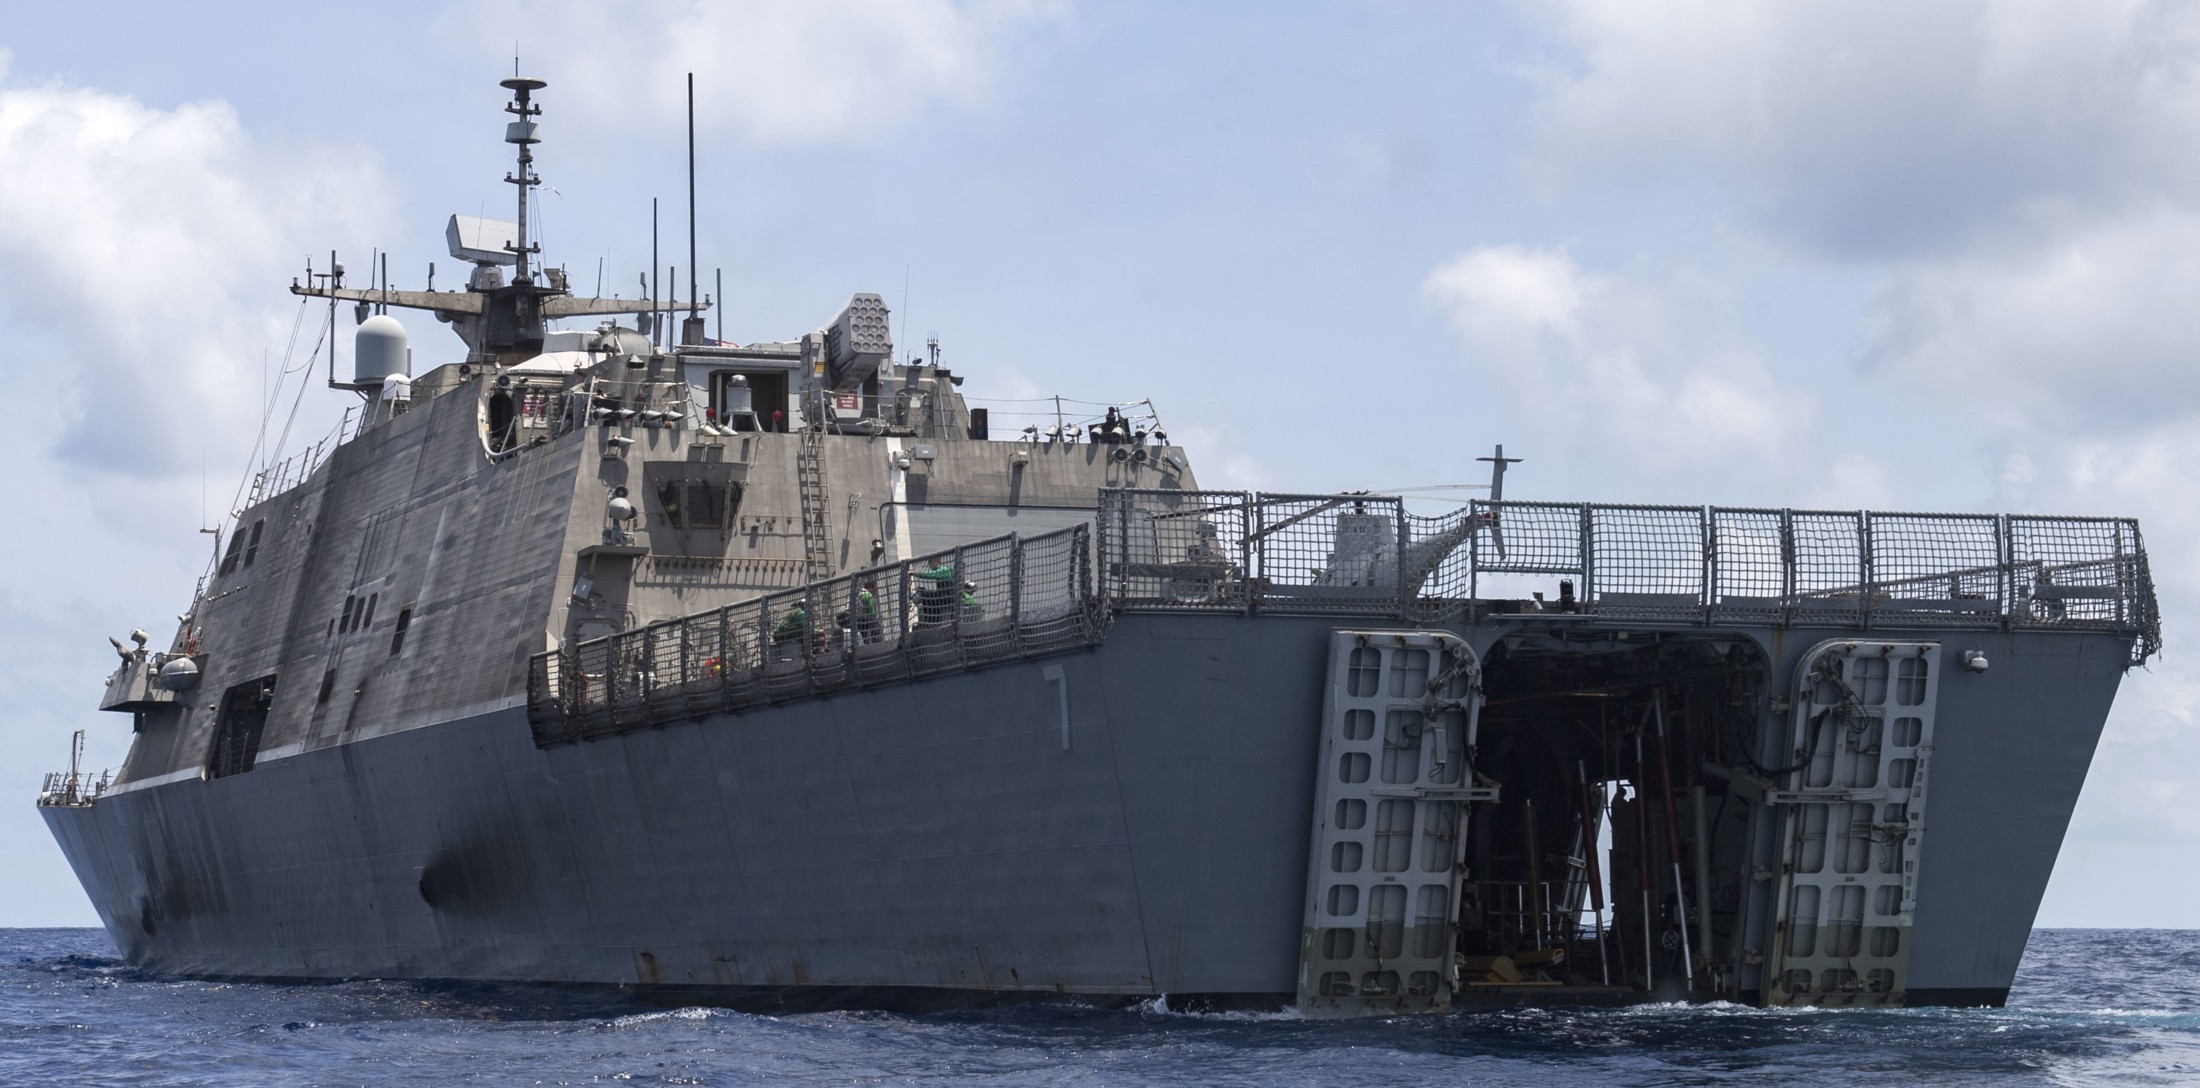 lcs-7 uss detroit freedom class littoral combat ship us navy 48 caribbean sea